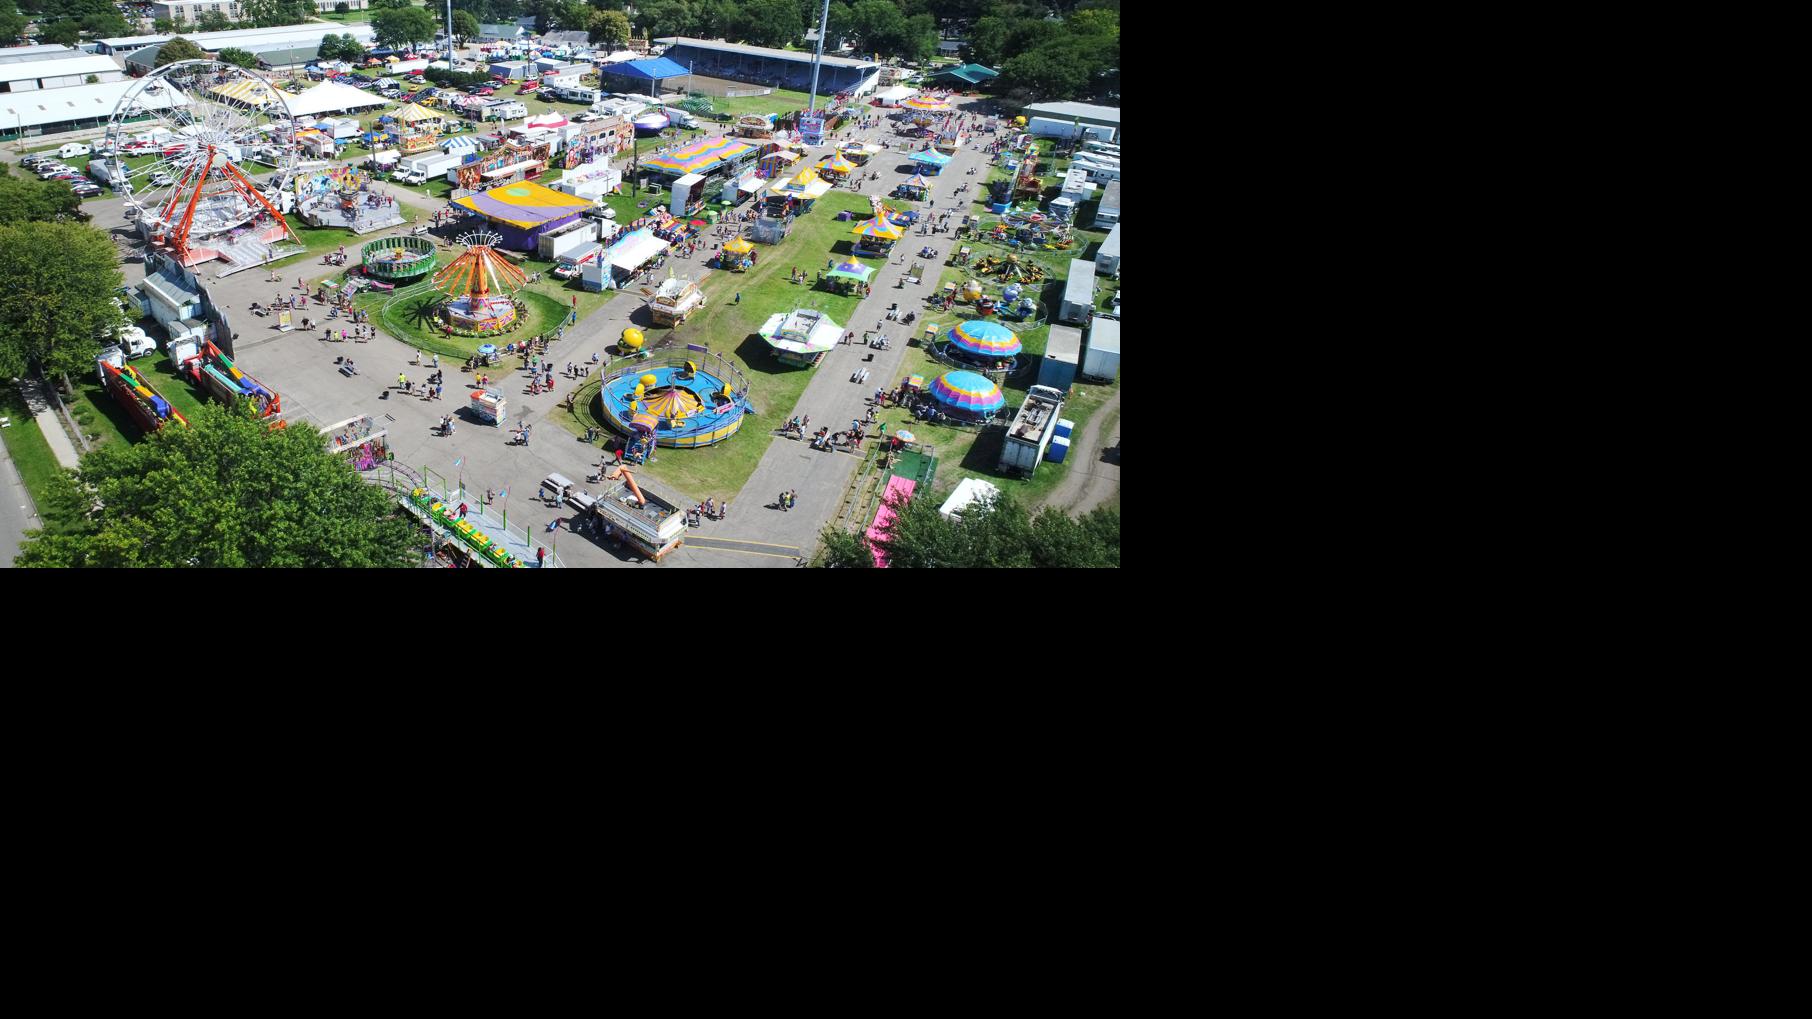 4H Fair grandstand entertainment released Rock County 4H Fair